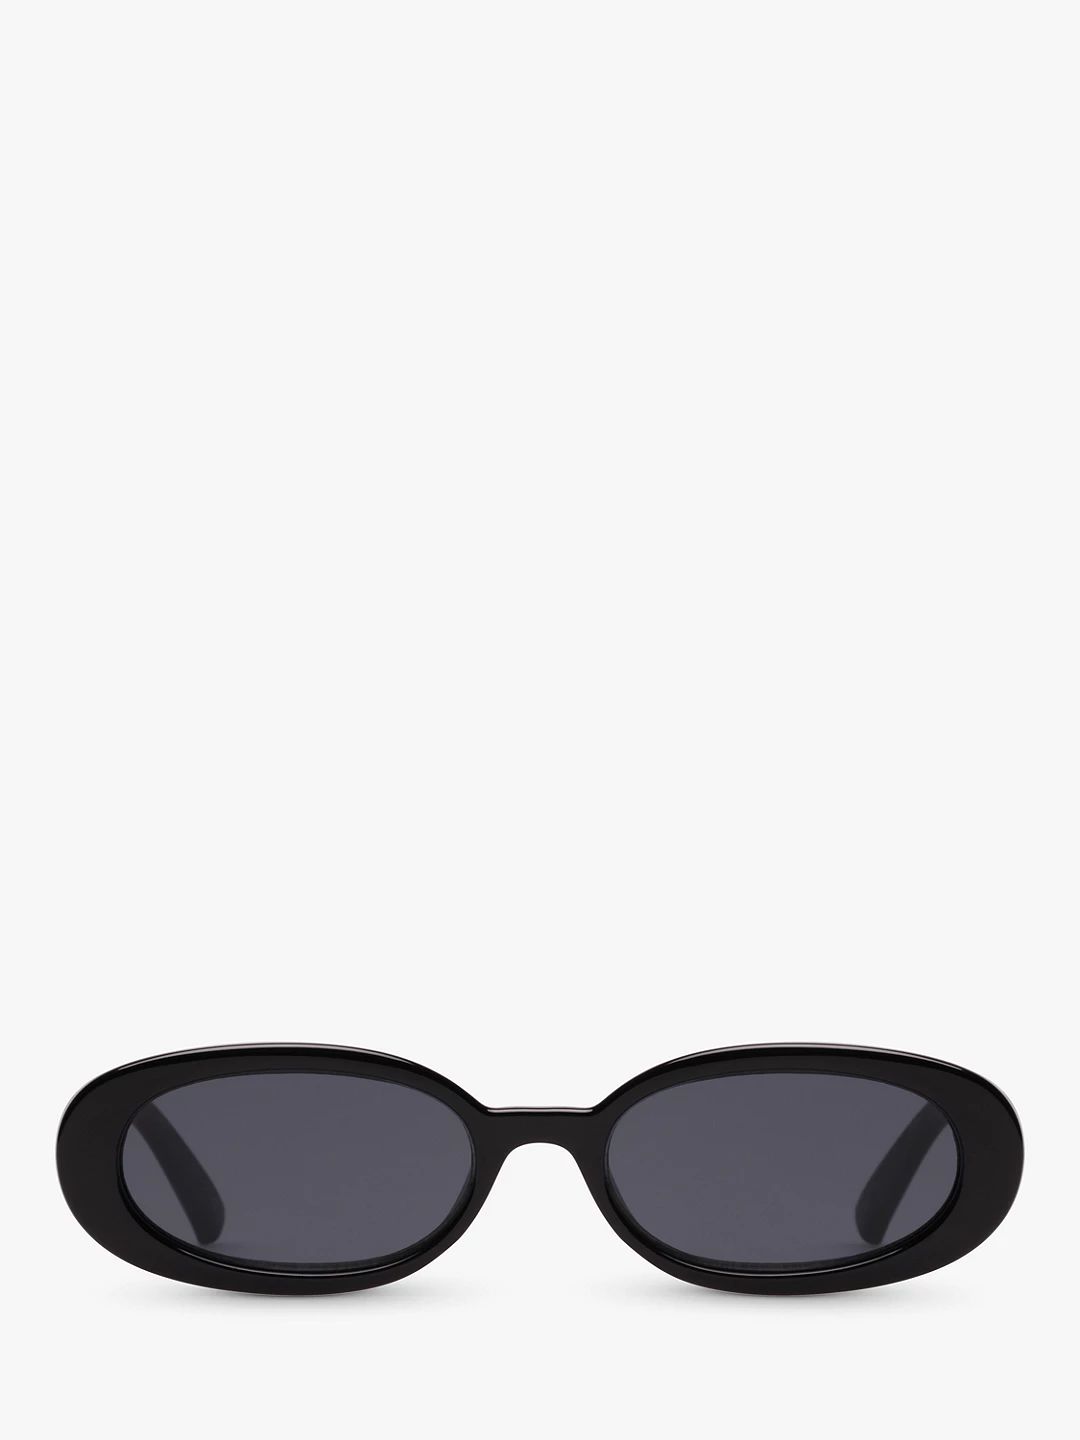 Le Specs L5000163 Unisex Outta Love Oval Sunglasses, Black/Grey | John Lewis (UK)